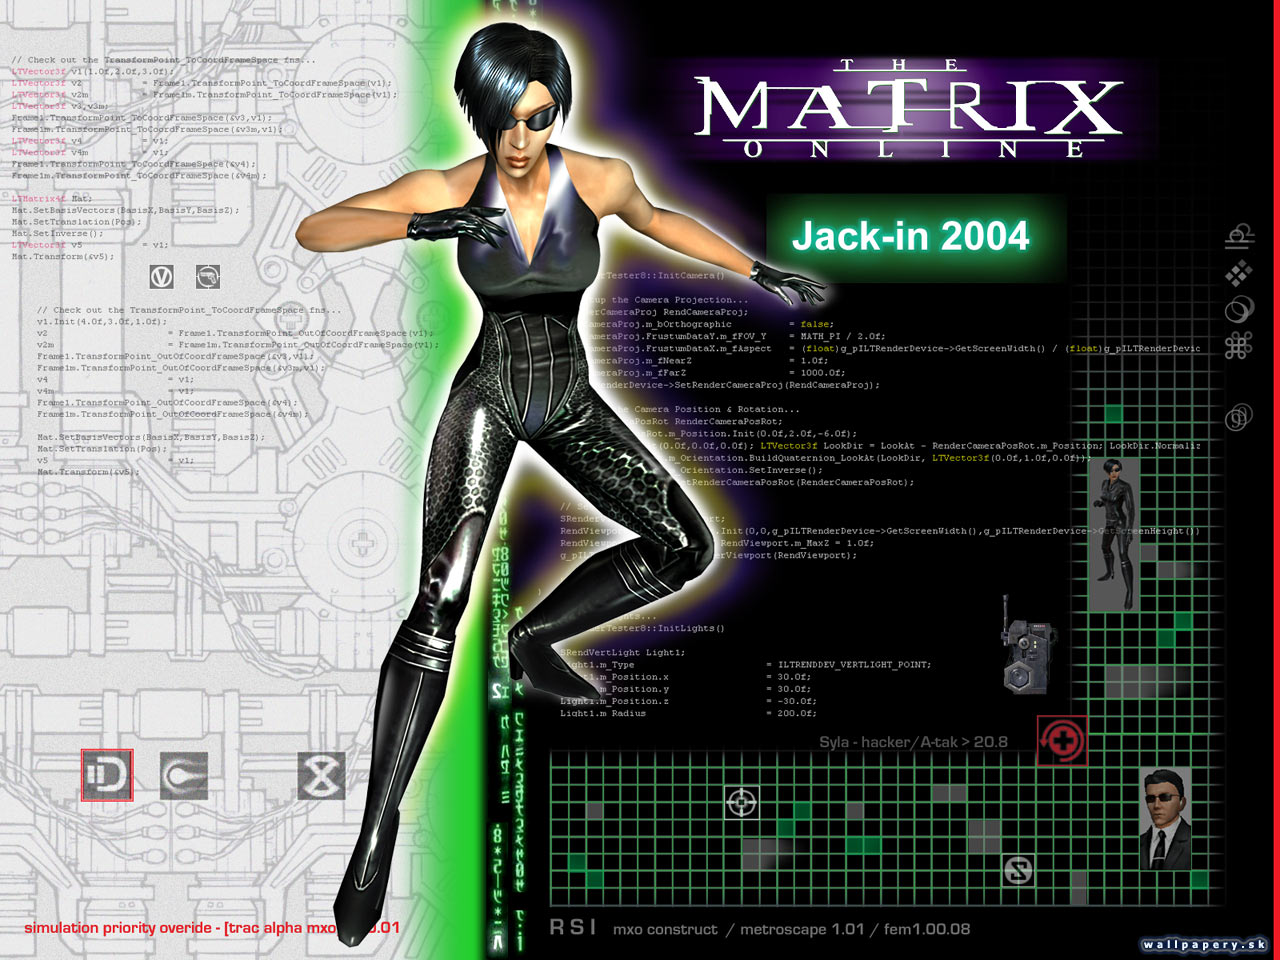 The Matrix Online - wallpaper 6